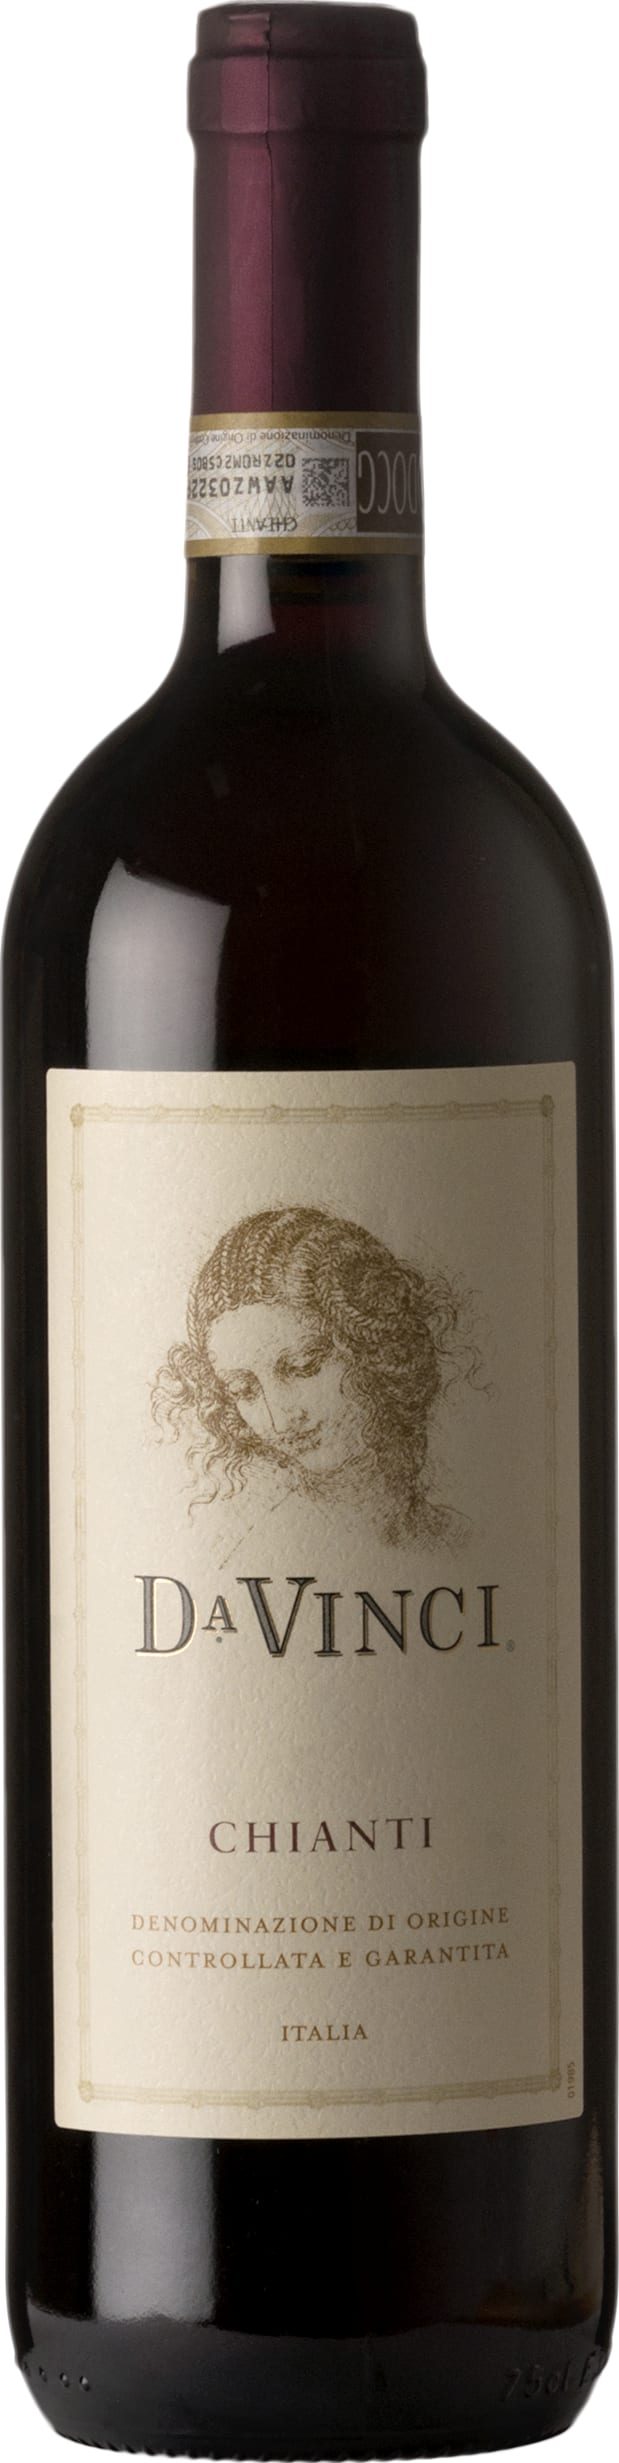 Cantine Leonardo Da Vinci Chianti 2021 75cl - Buy Cantine Leonardo Da Vinci Wines from GREAT WINES DIRECT wine shop